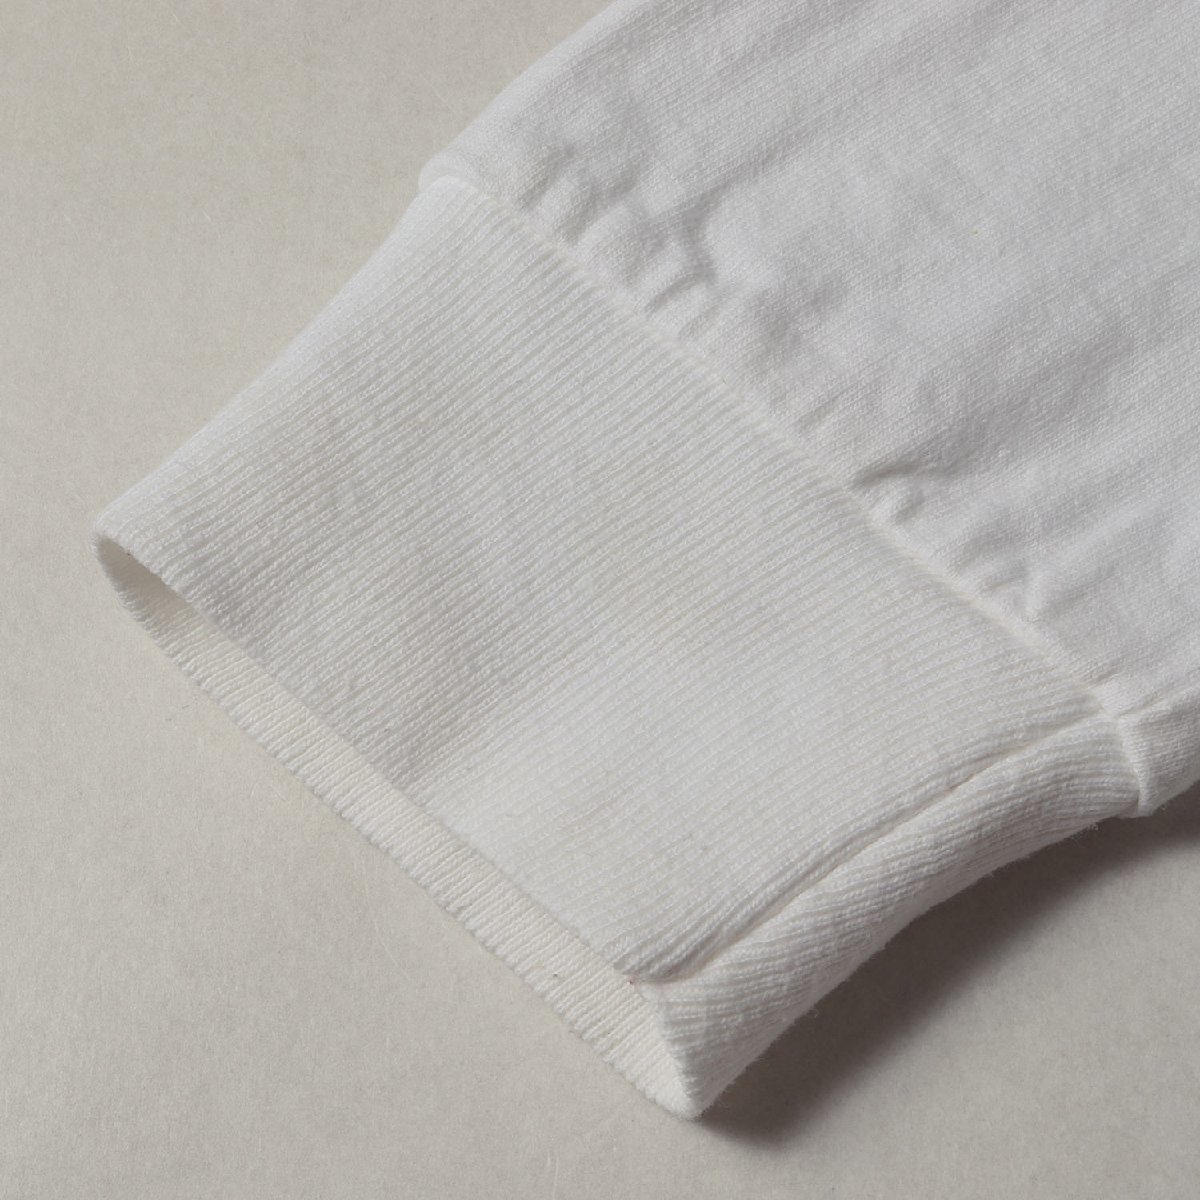 STUSSY Stussy футболка размер :XL градация графика длинный рукав футболка белый tops cut and sewn длинный рукав 